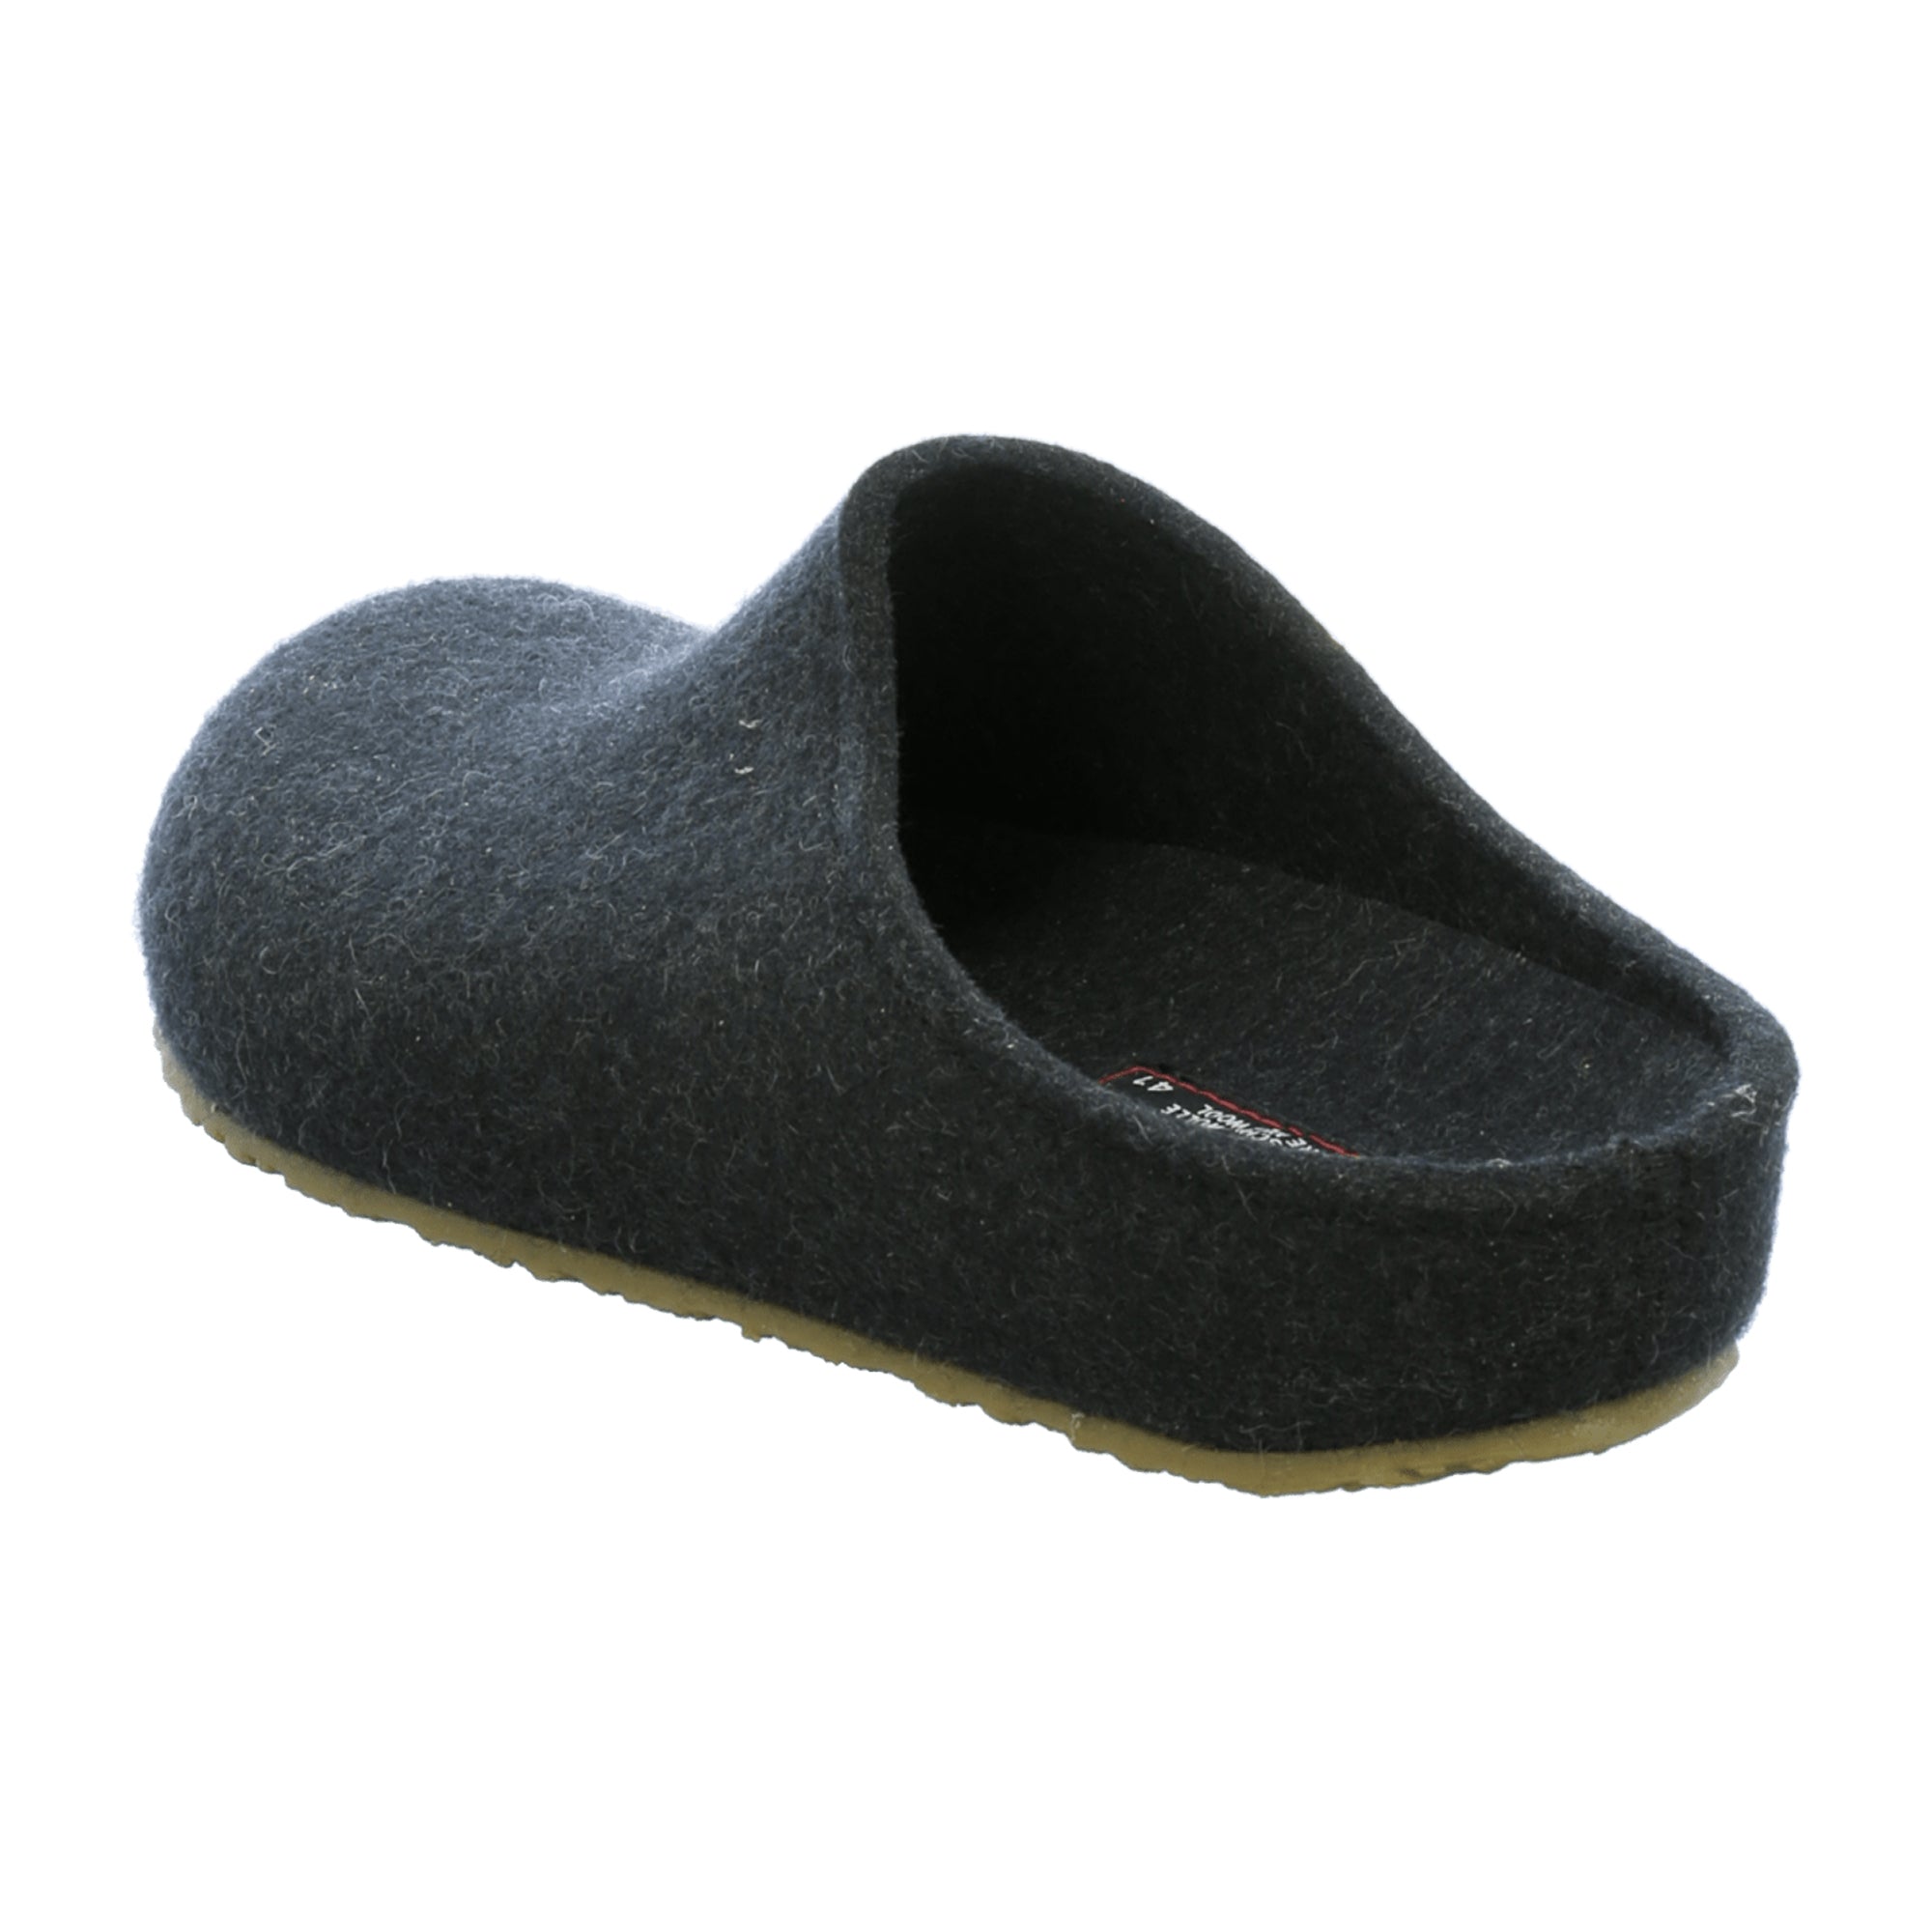 Haflinger Men's Slippers - Stylish & Durable Gray Wool Comfort